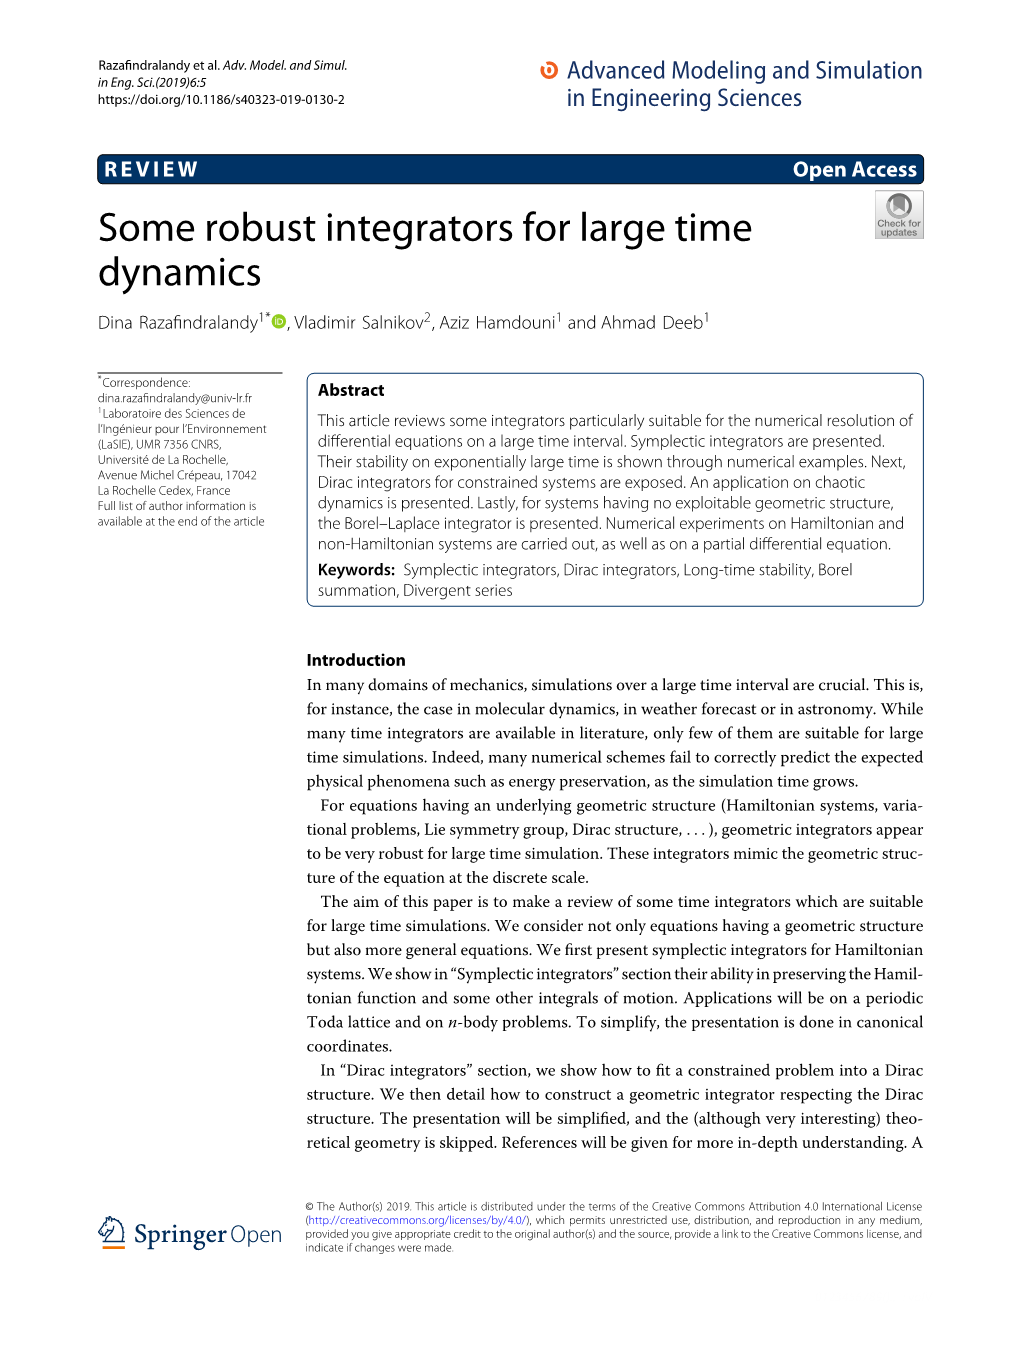 Some Robust Integrators for Large Time Dynamics